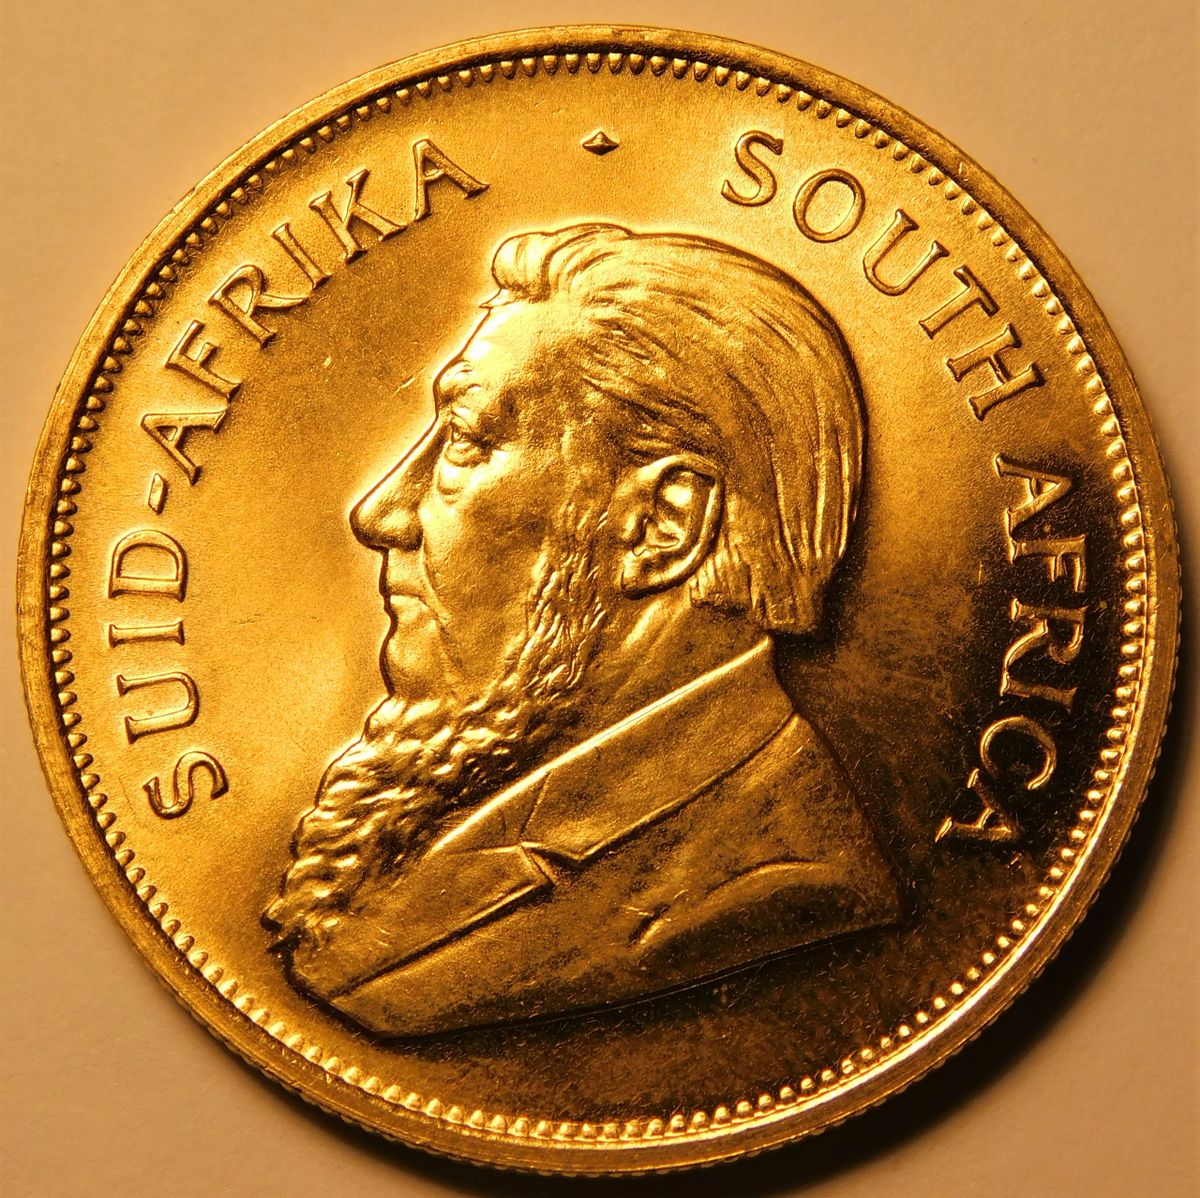 1975 South Africa Krugerrand Gold Coin 1 oz.